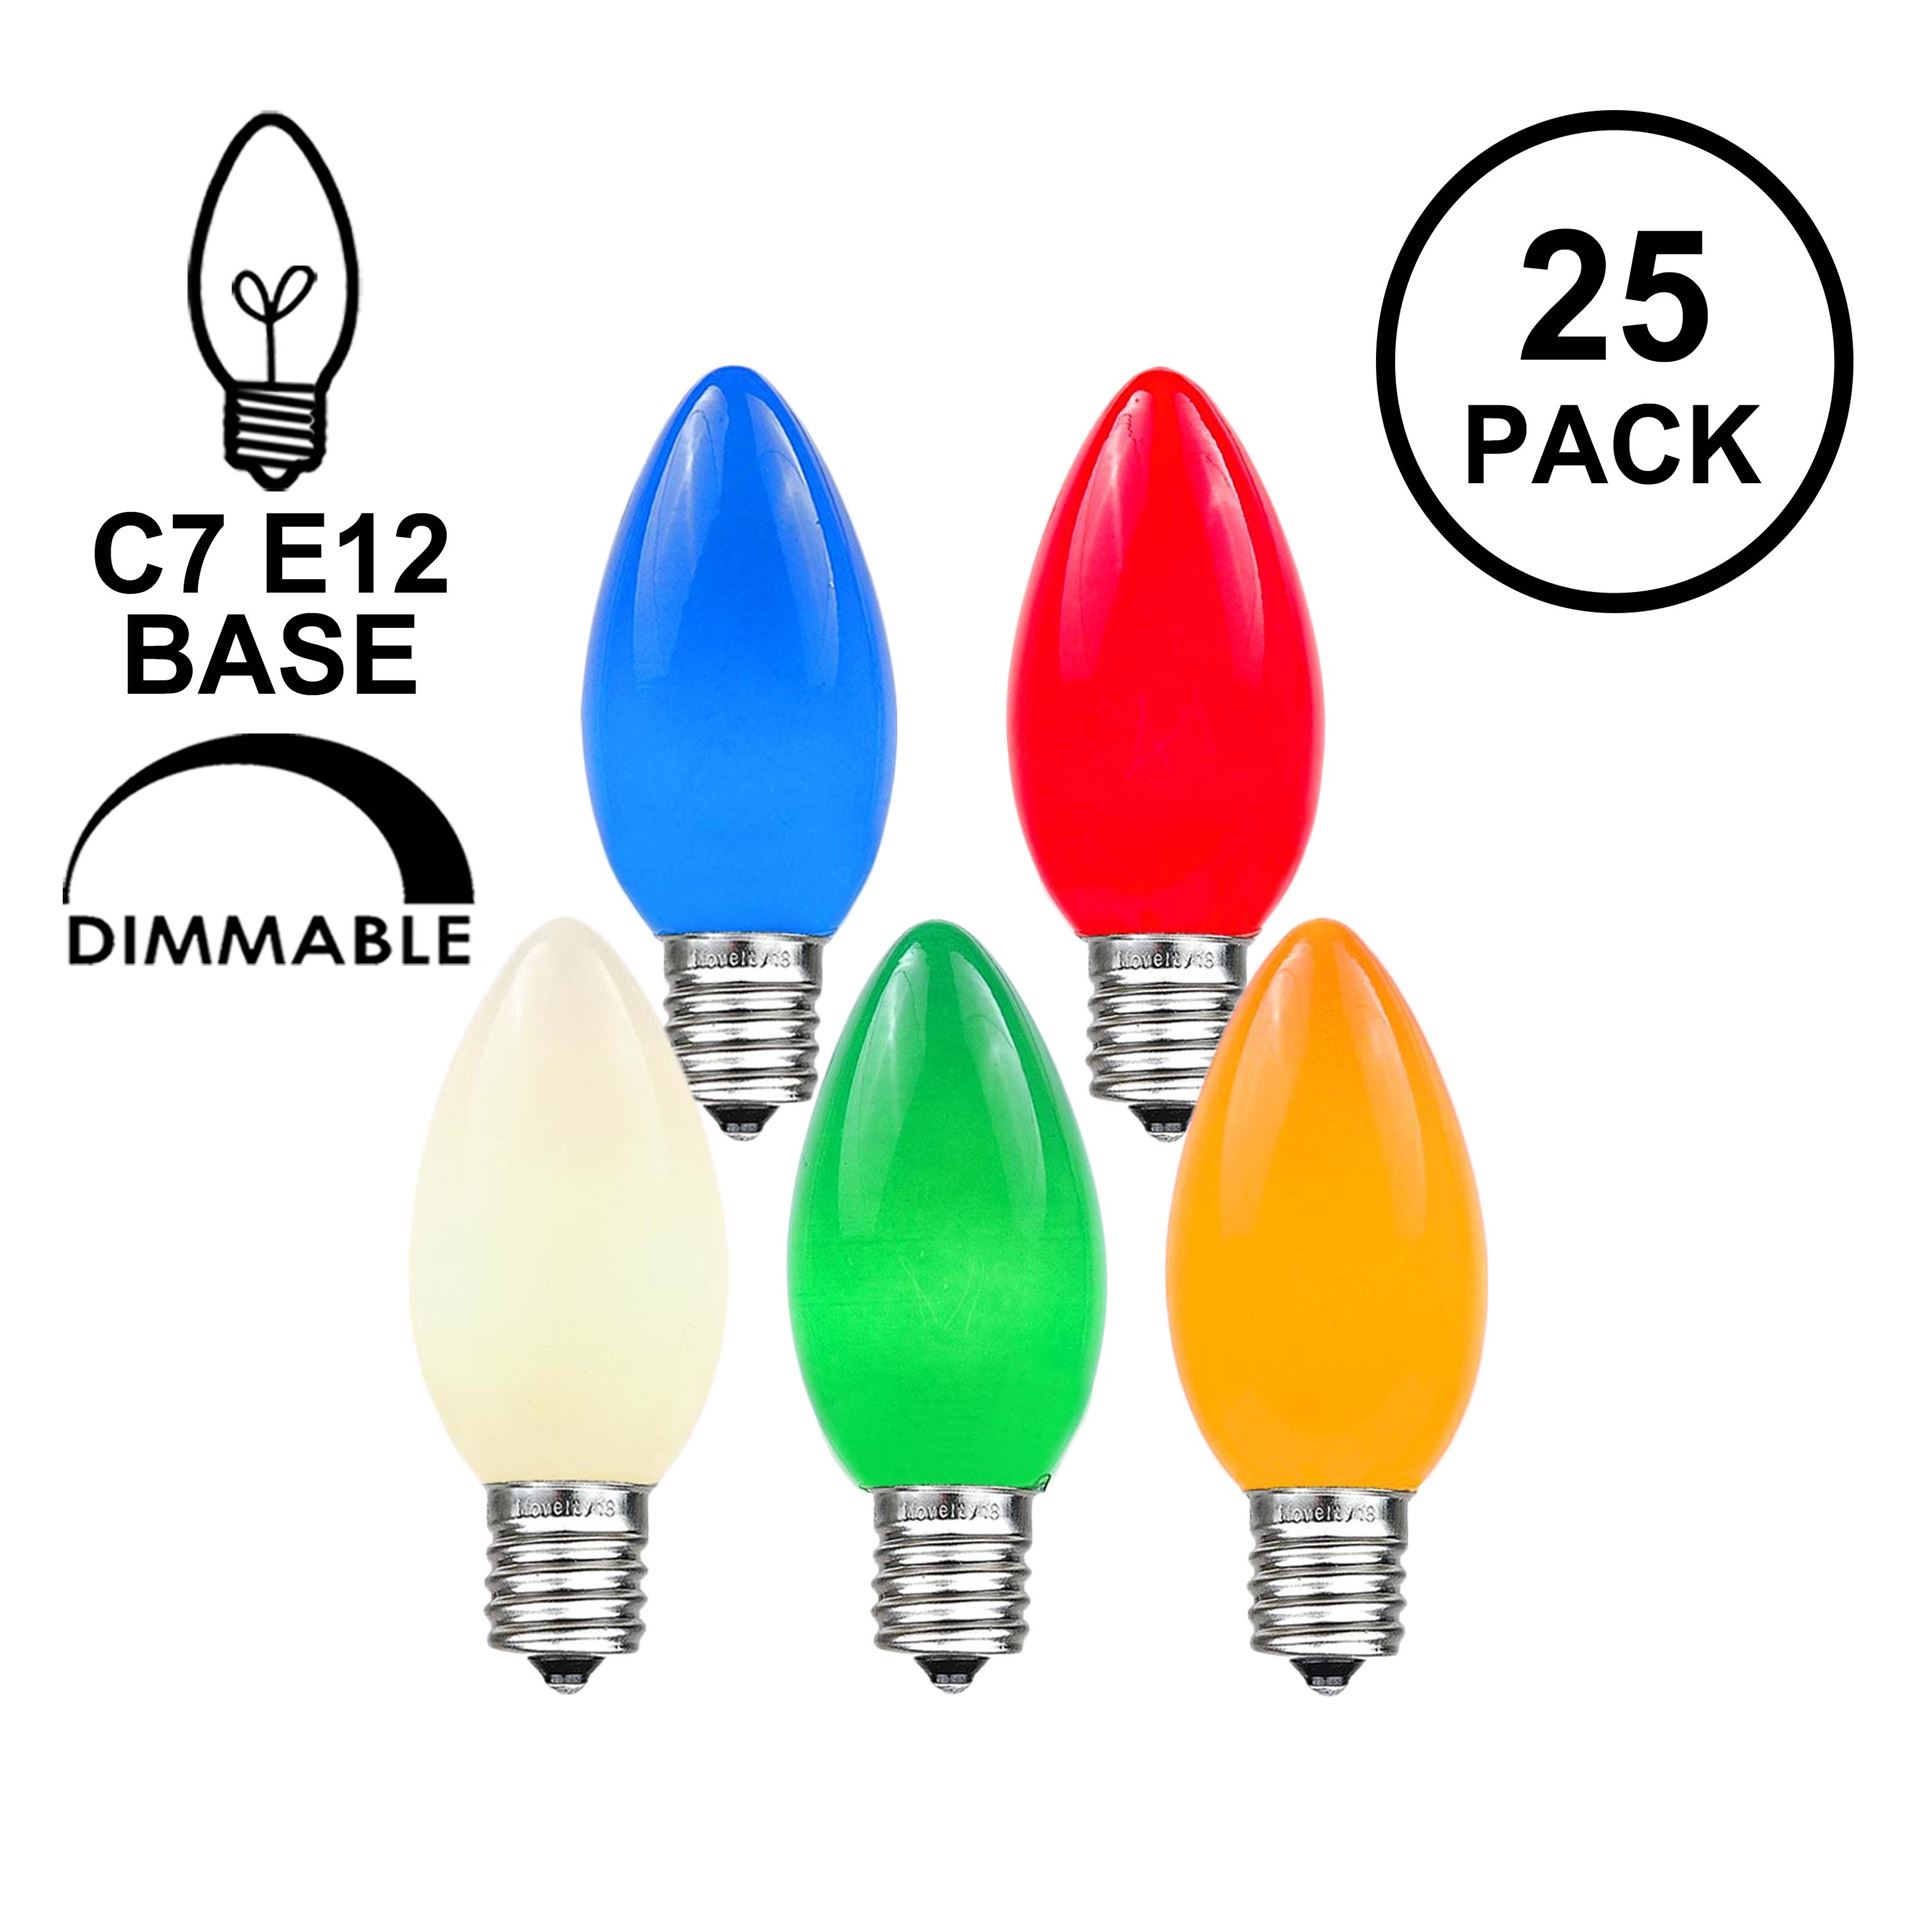 Novelty Lights 25 Pack C7 Outdoor String Light Christmas Replacement Bulbs Amber C7/E12 Candelabra Base 5 Watt 